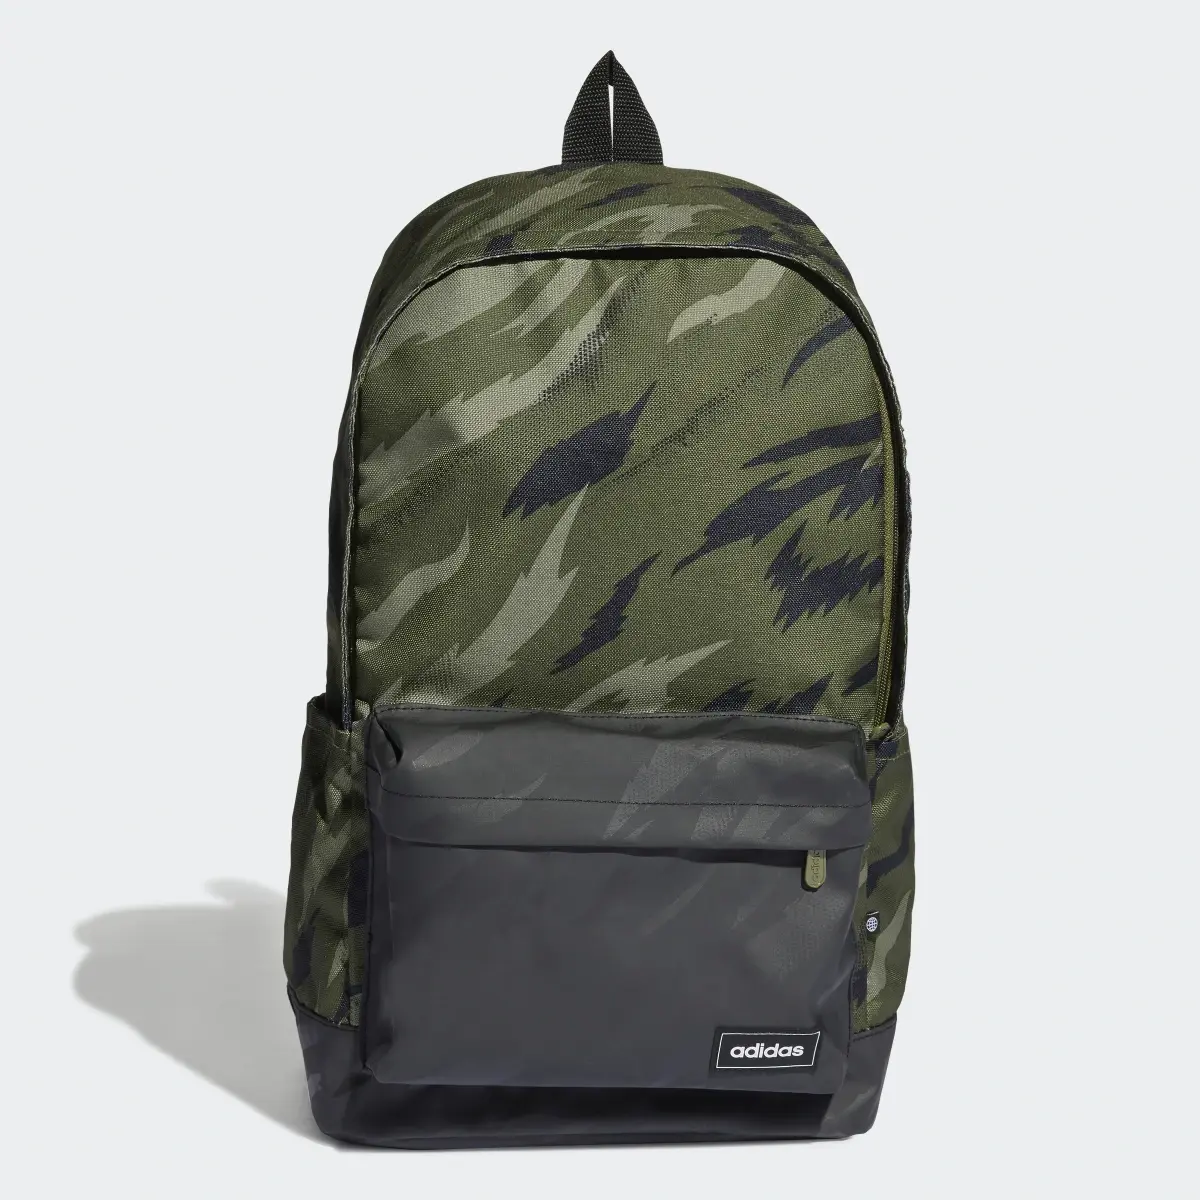 Adidas Classic Camo Backpack. 2